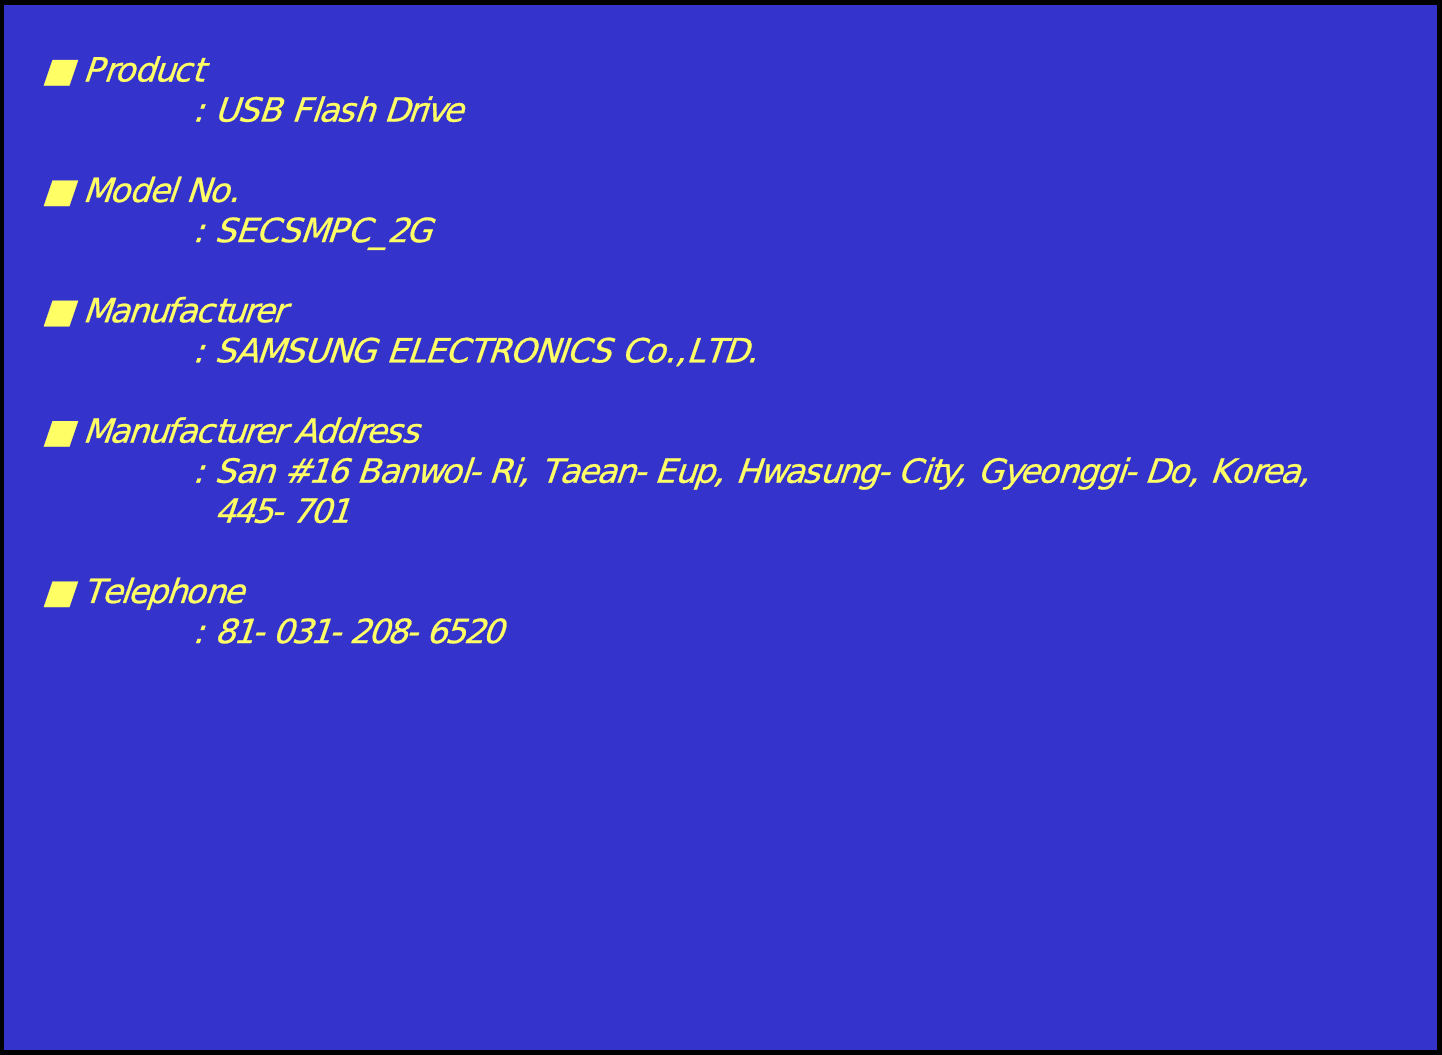 ■Product: USB Flash Drive■ Model No.: SECSMPC_2G■ Manufacturer: SAMSUNG ELECTRONICS Co.,LTD.■ Manufacturer Address: San #16 Banwol-Ri, Taean-Eup, Hwasung-City, Gyeonggi-Do, Korea,445-701■Telephone: 81-031-208-6520